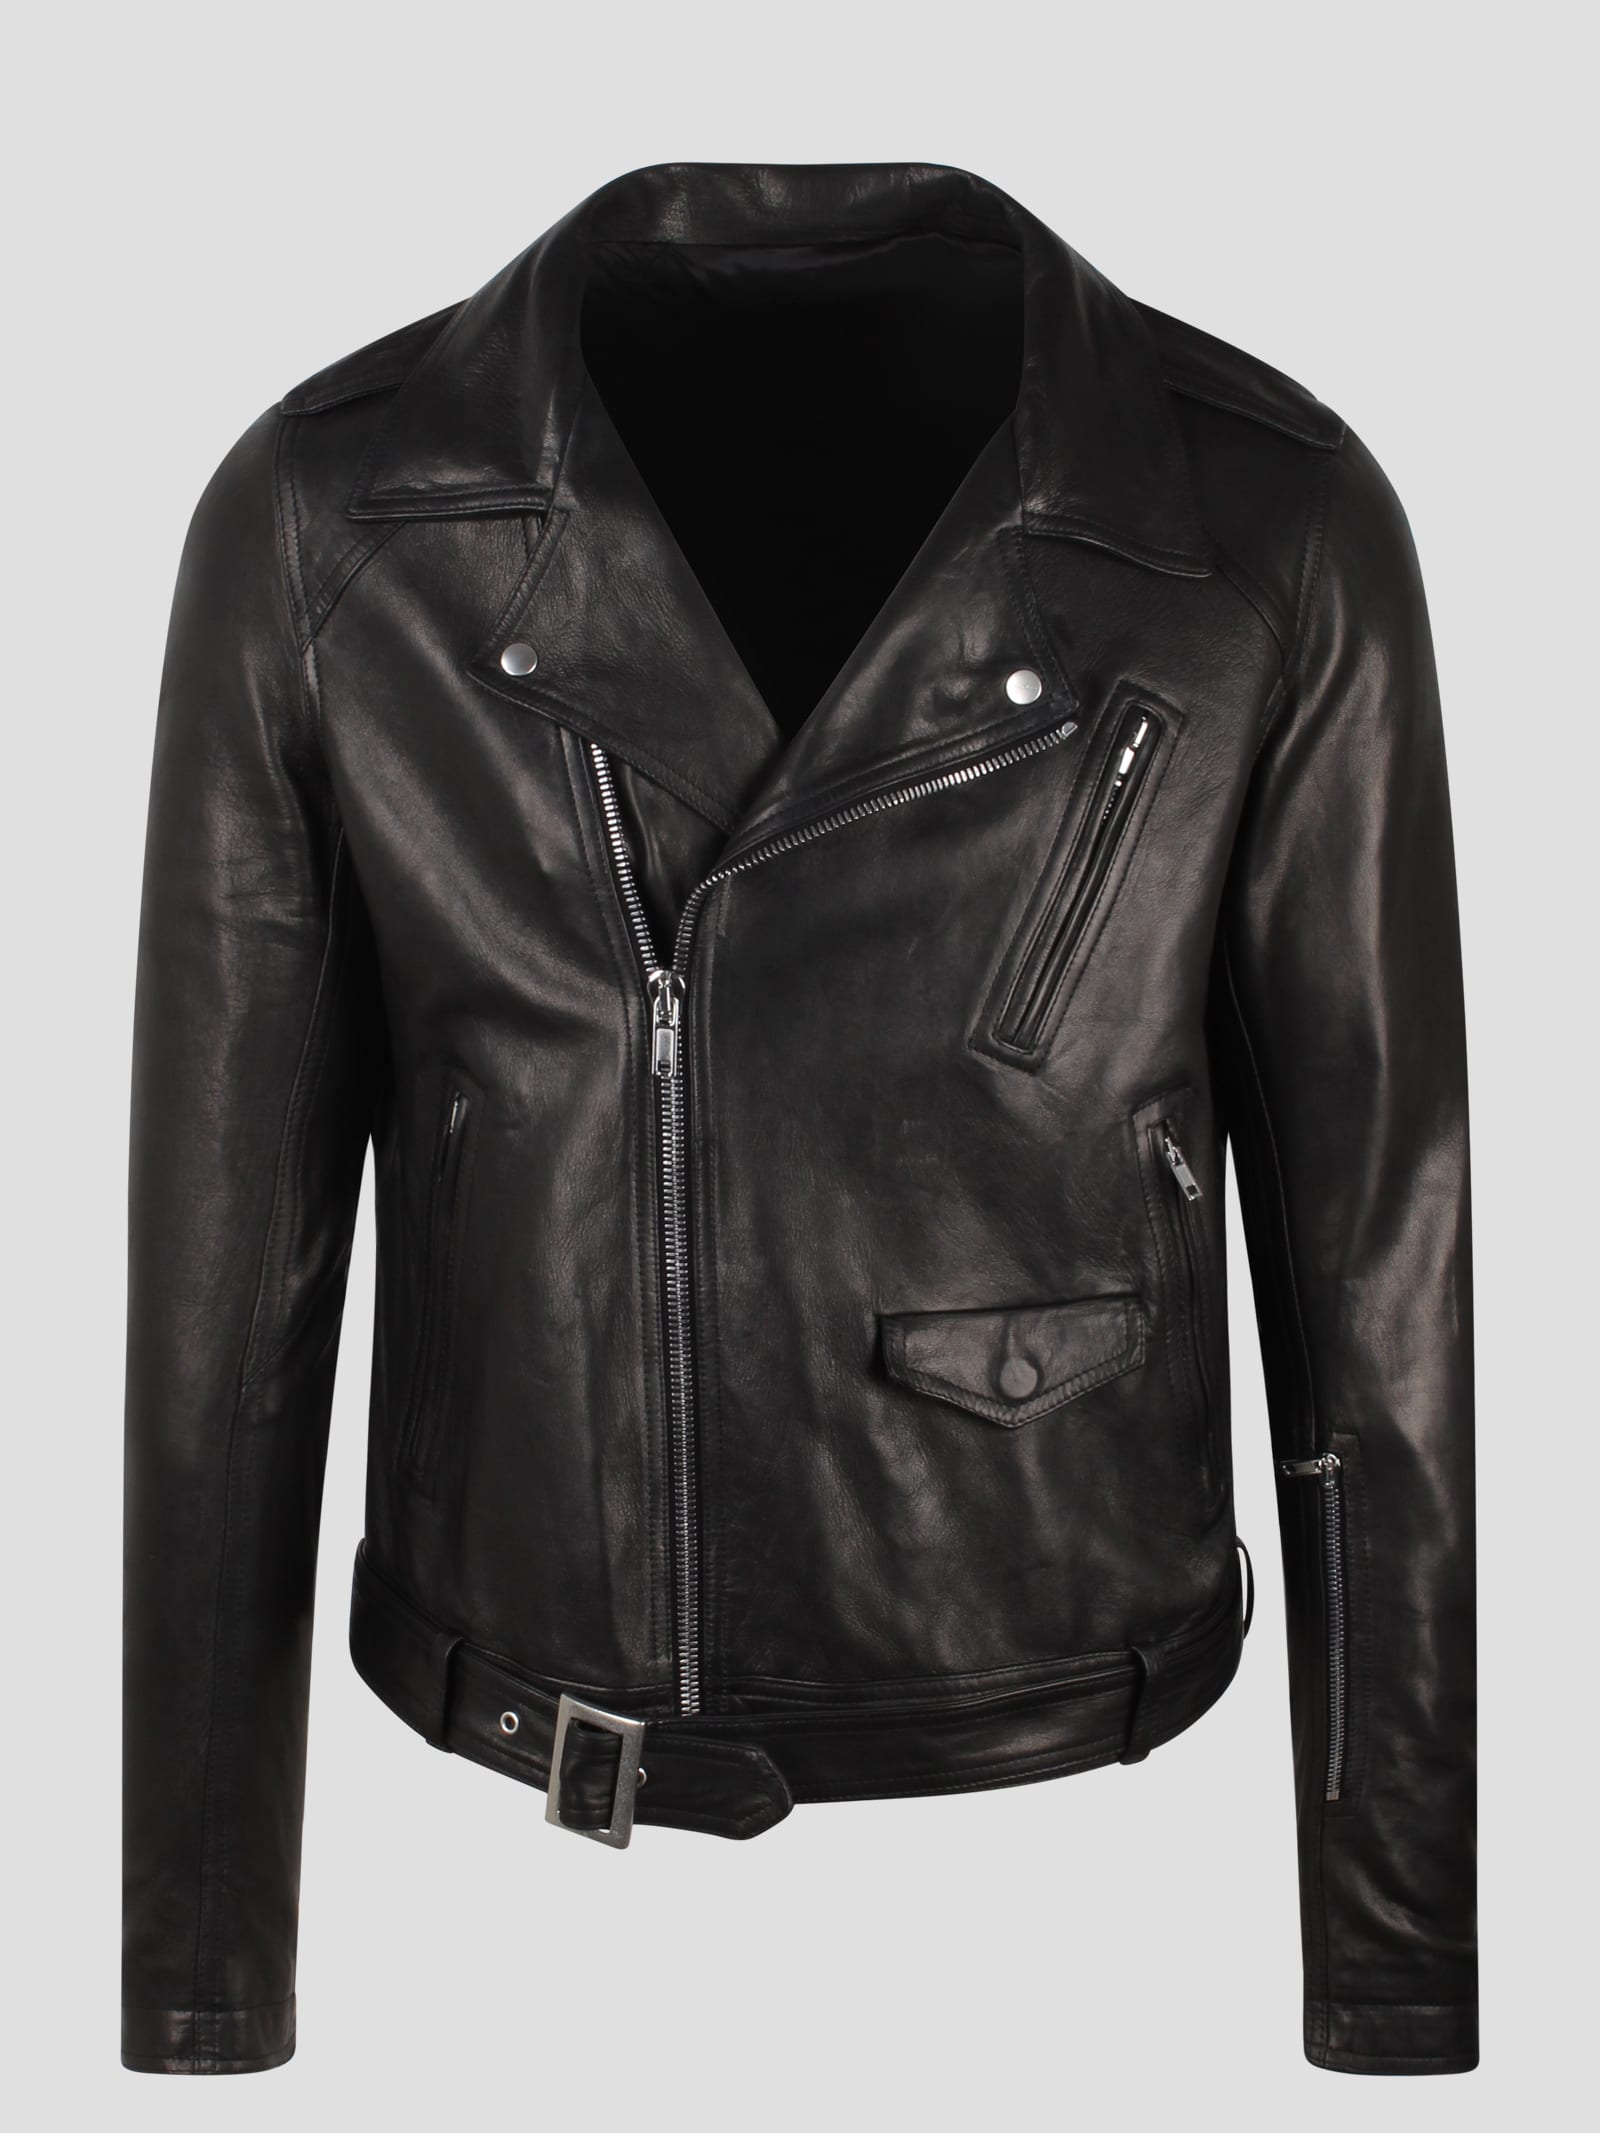 Lukes Stooges Leather Jacket